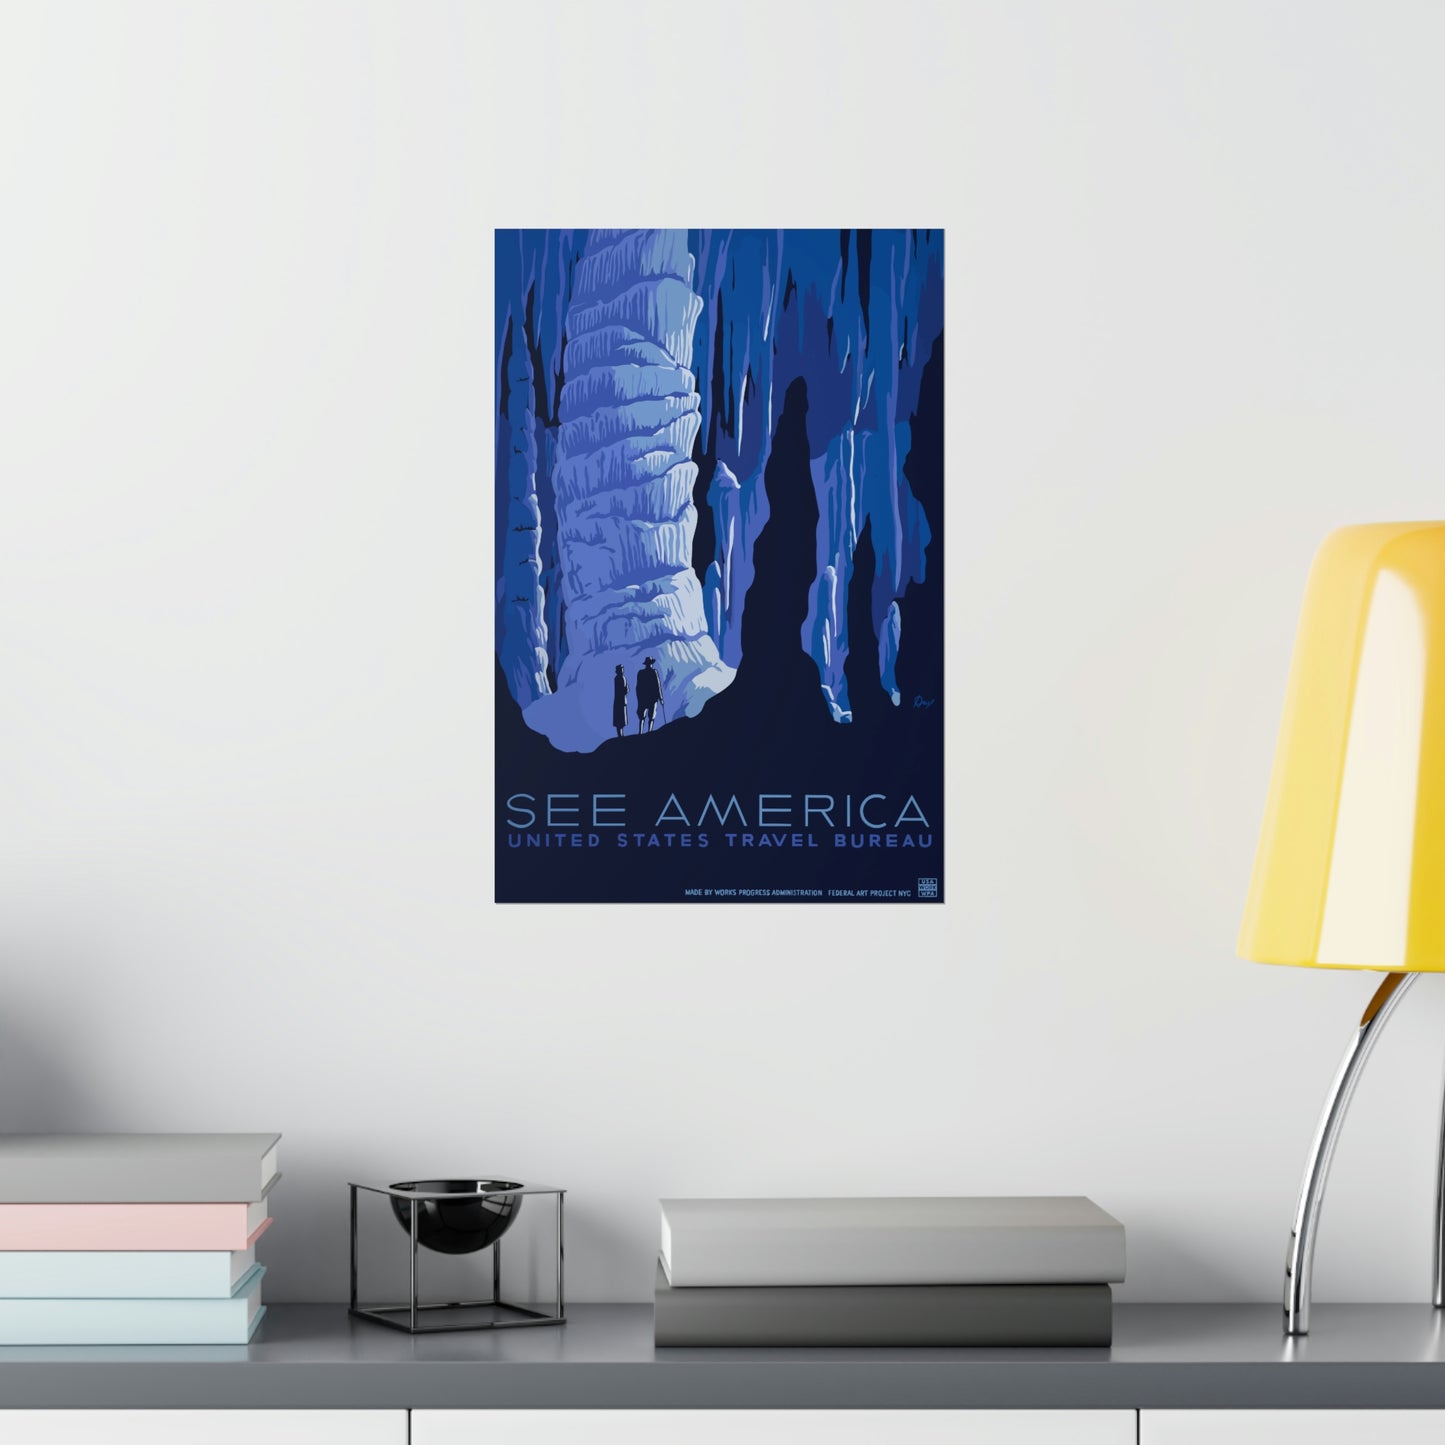 Carlsbad Caverns National Park Poster See America - Vintage WPA Design